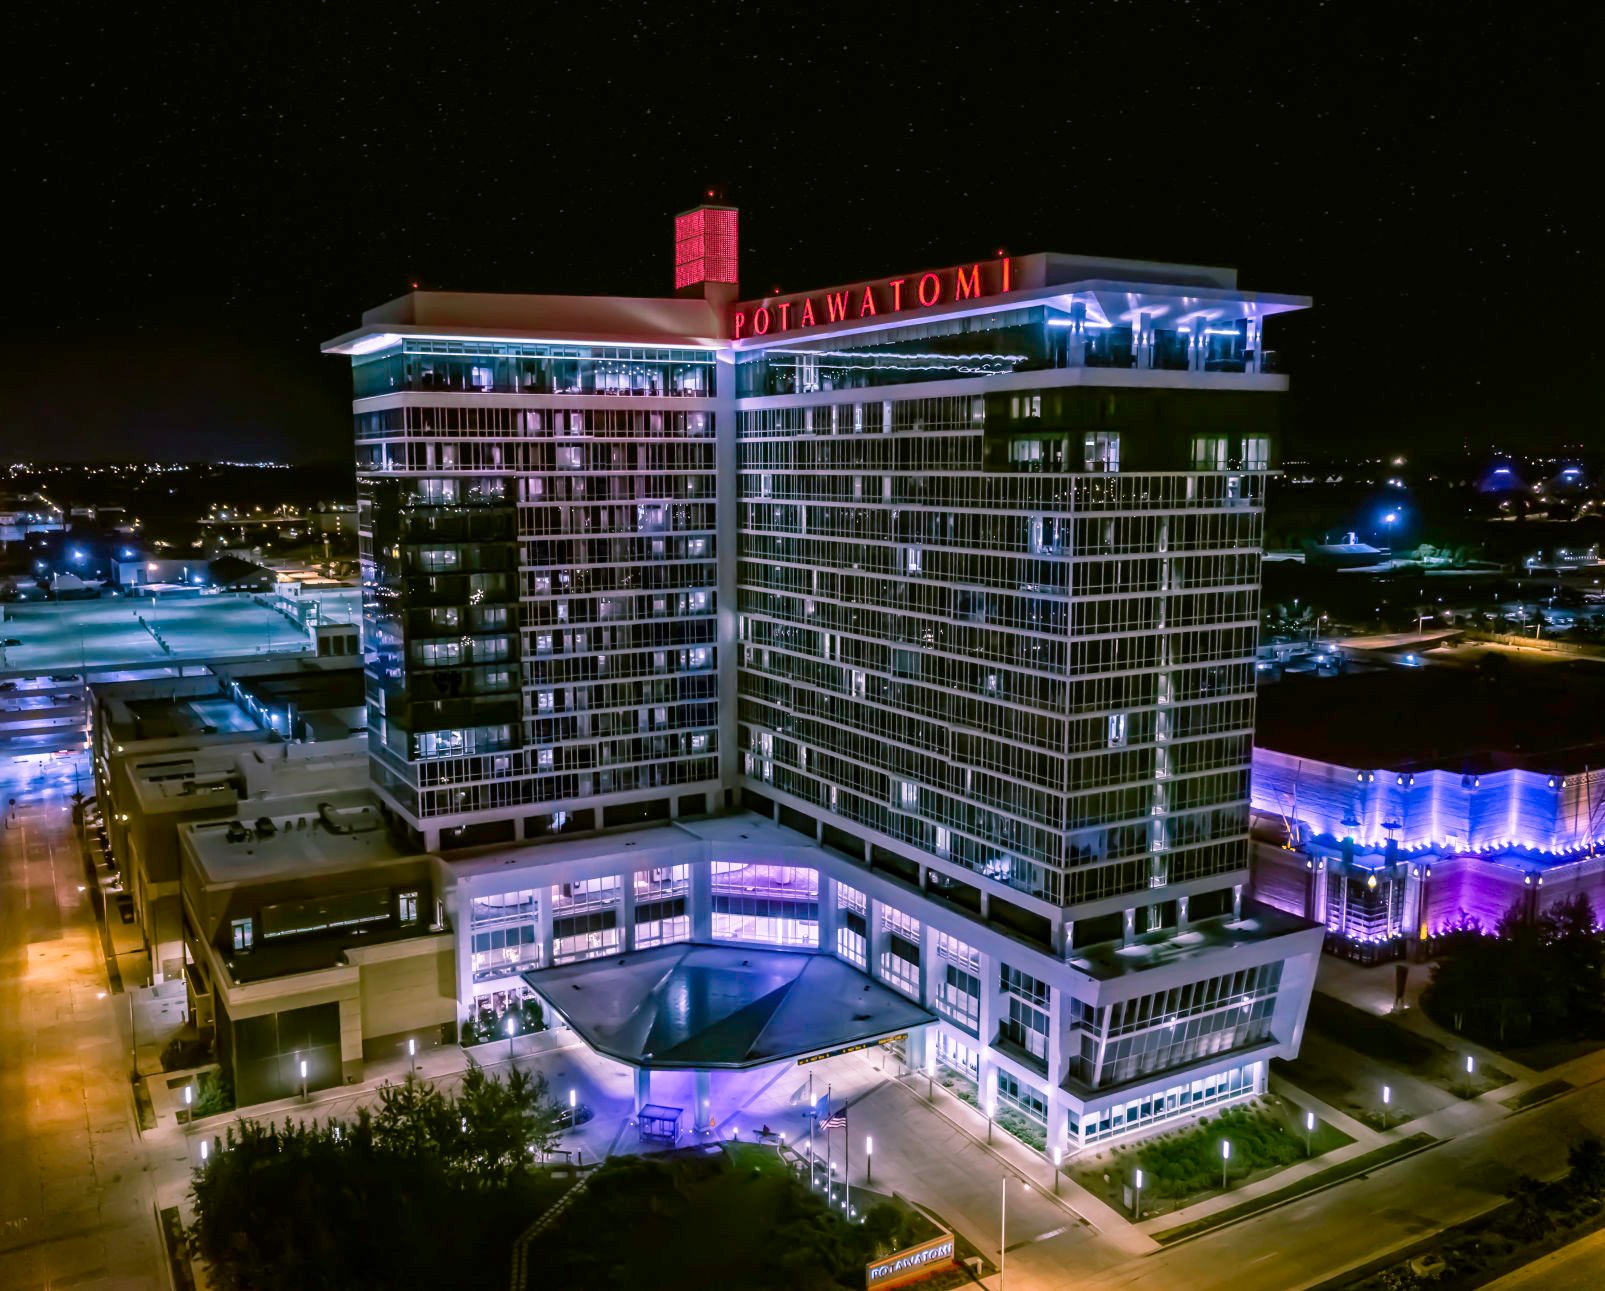 potawatomi hotel casino in milwaukee wisconsin